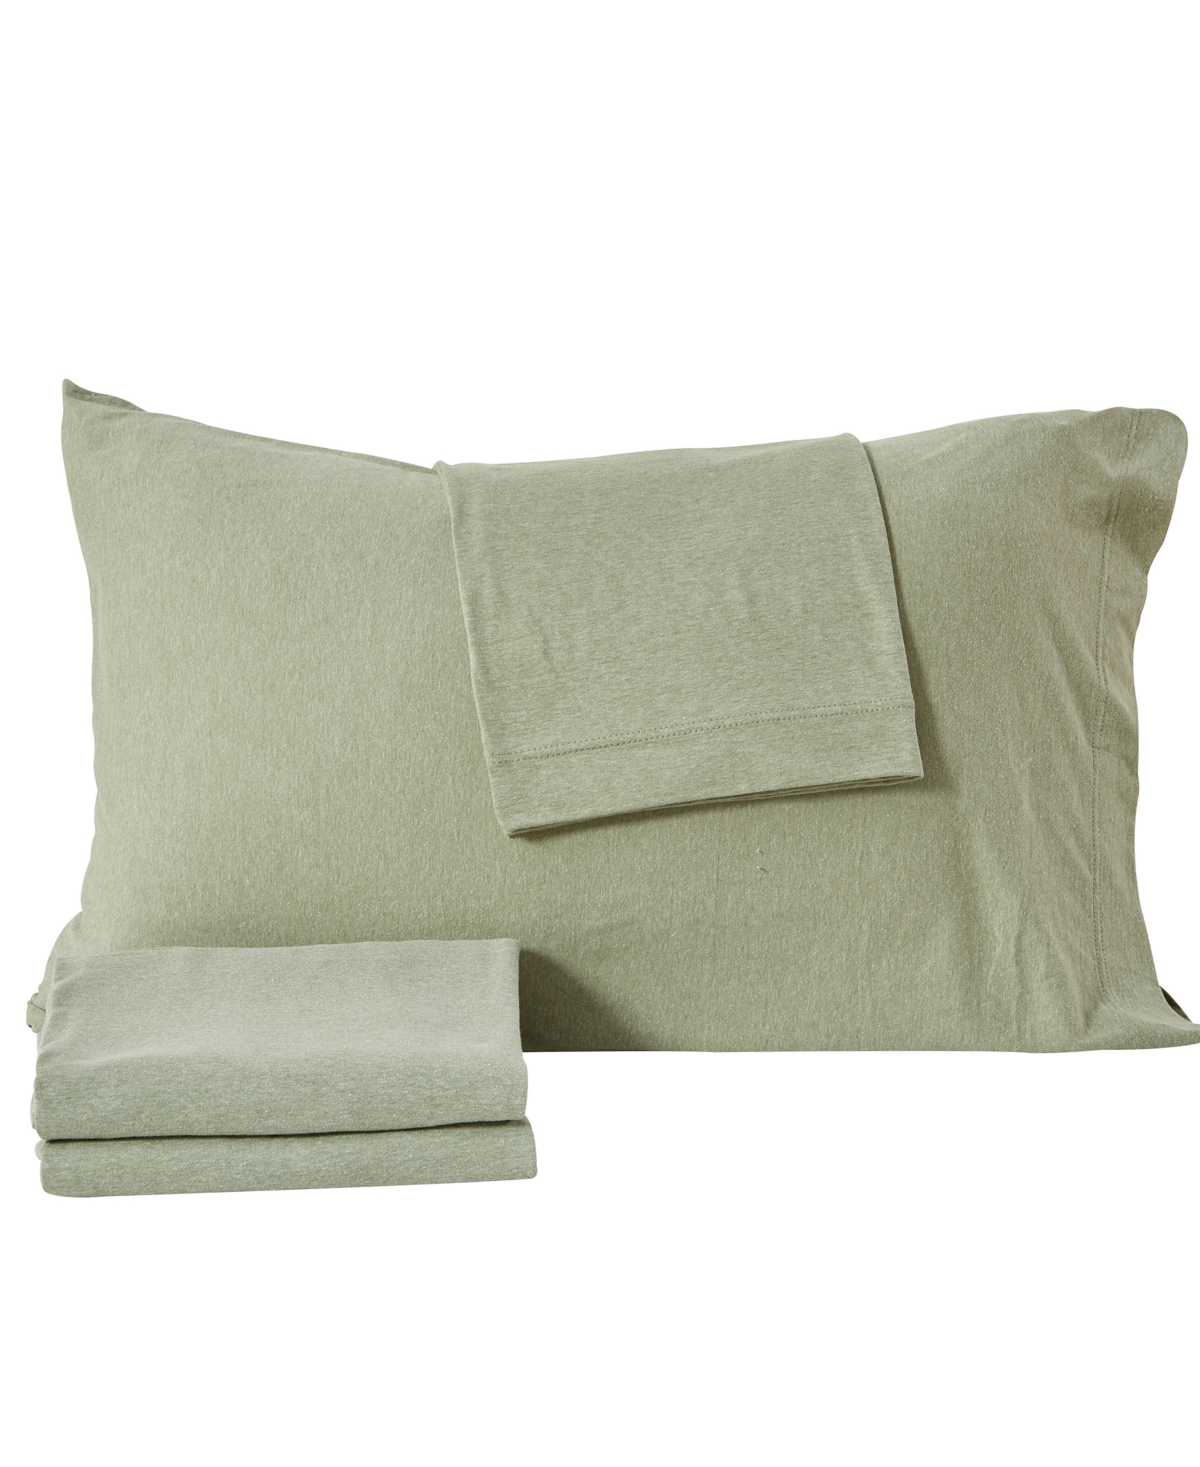 Premium Comforts Heathered Melange T-shirt Jersey Knit Cotton Blend 4 Piece Sheet Set, Twin Xl In Heathered Eucalyptus